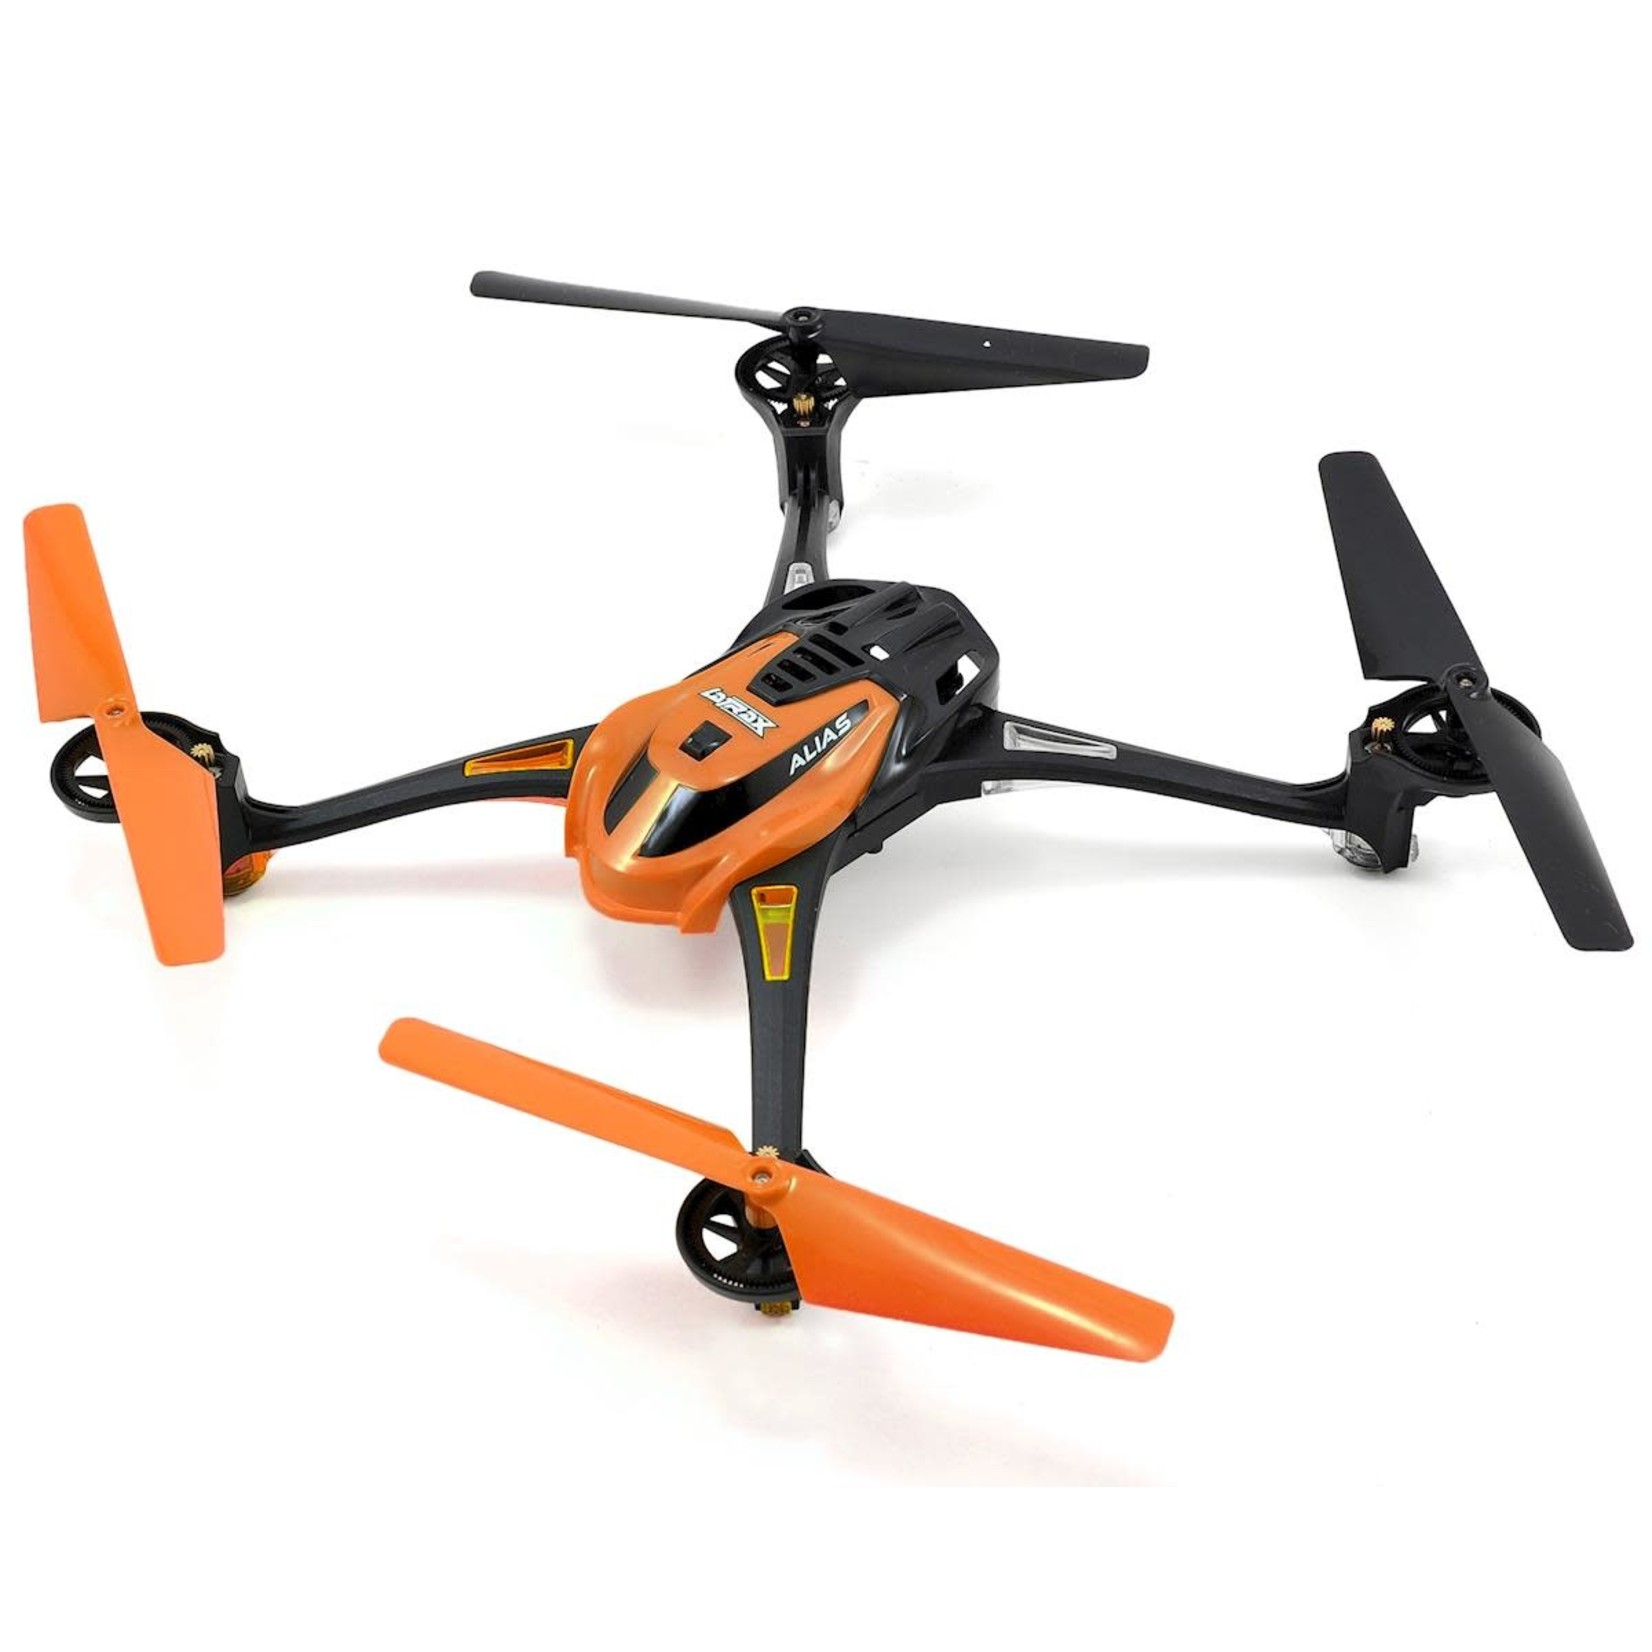 Traxxas Traxxas LaTrax Alias Ready-To-Fly Micro Electric Quadcopter Drone (Orange) #6608-ORNG